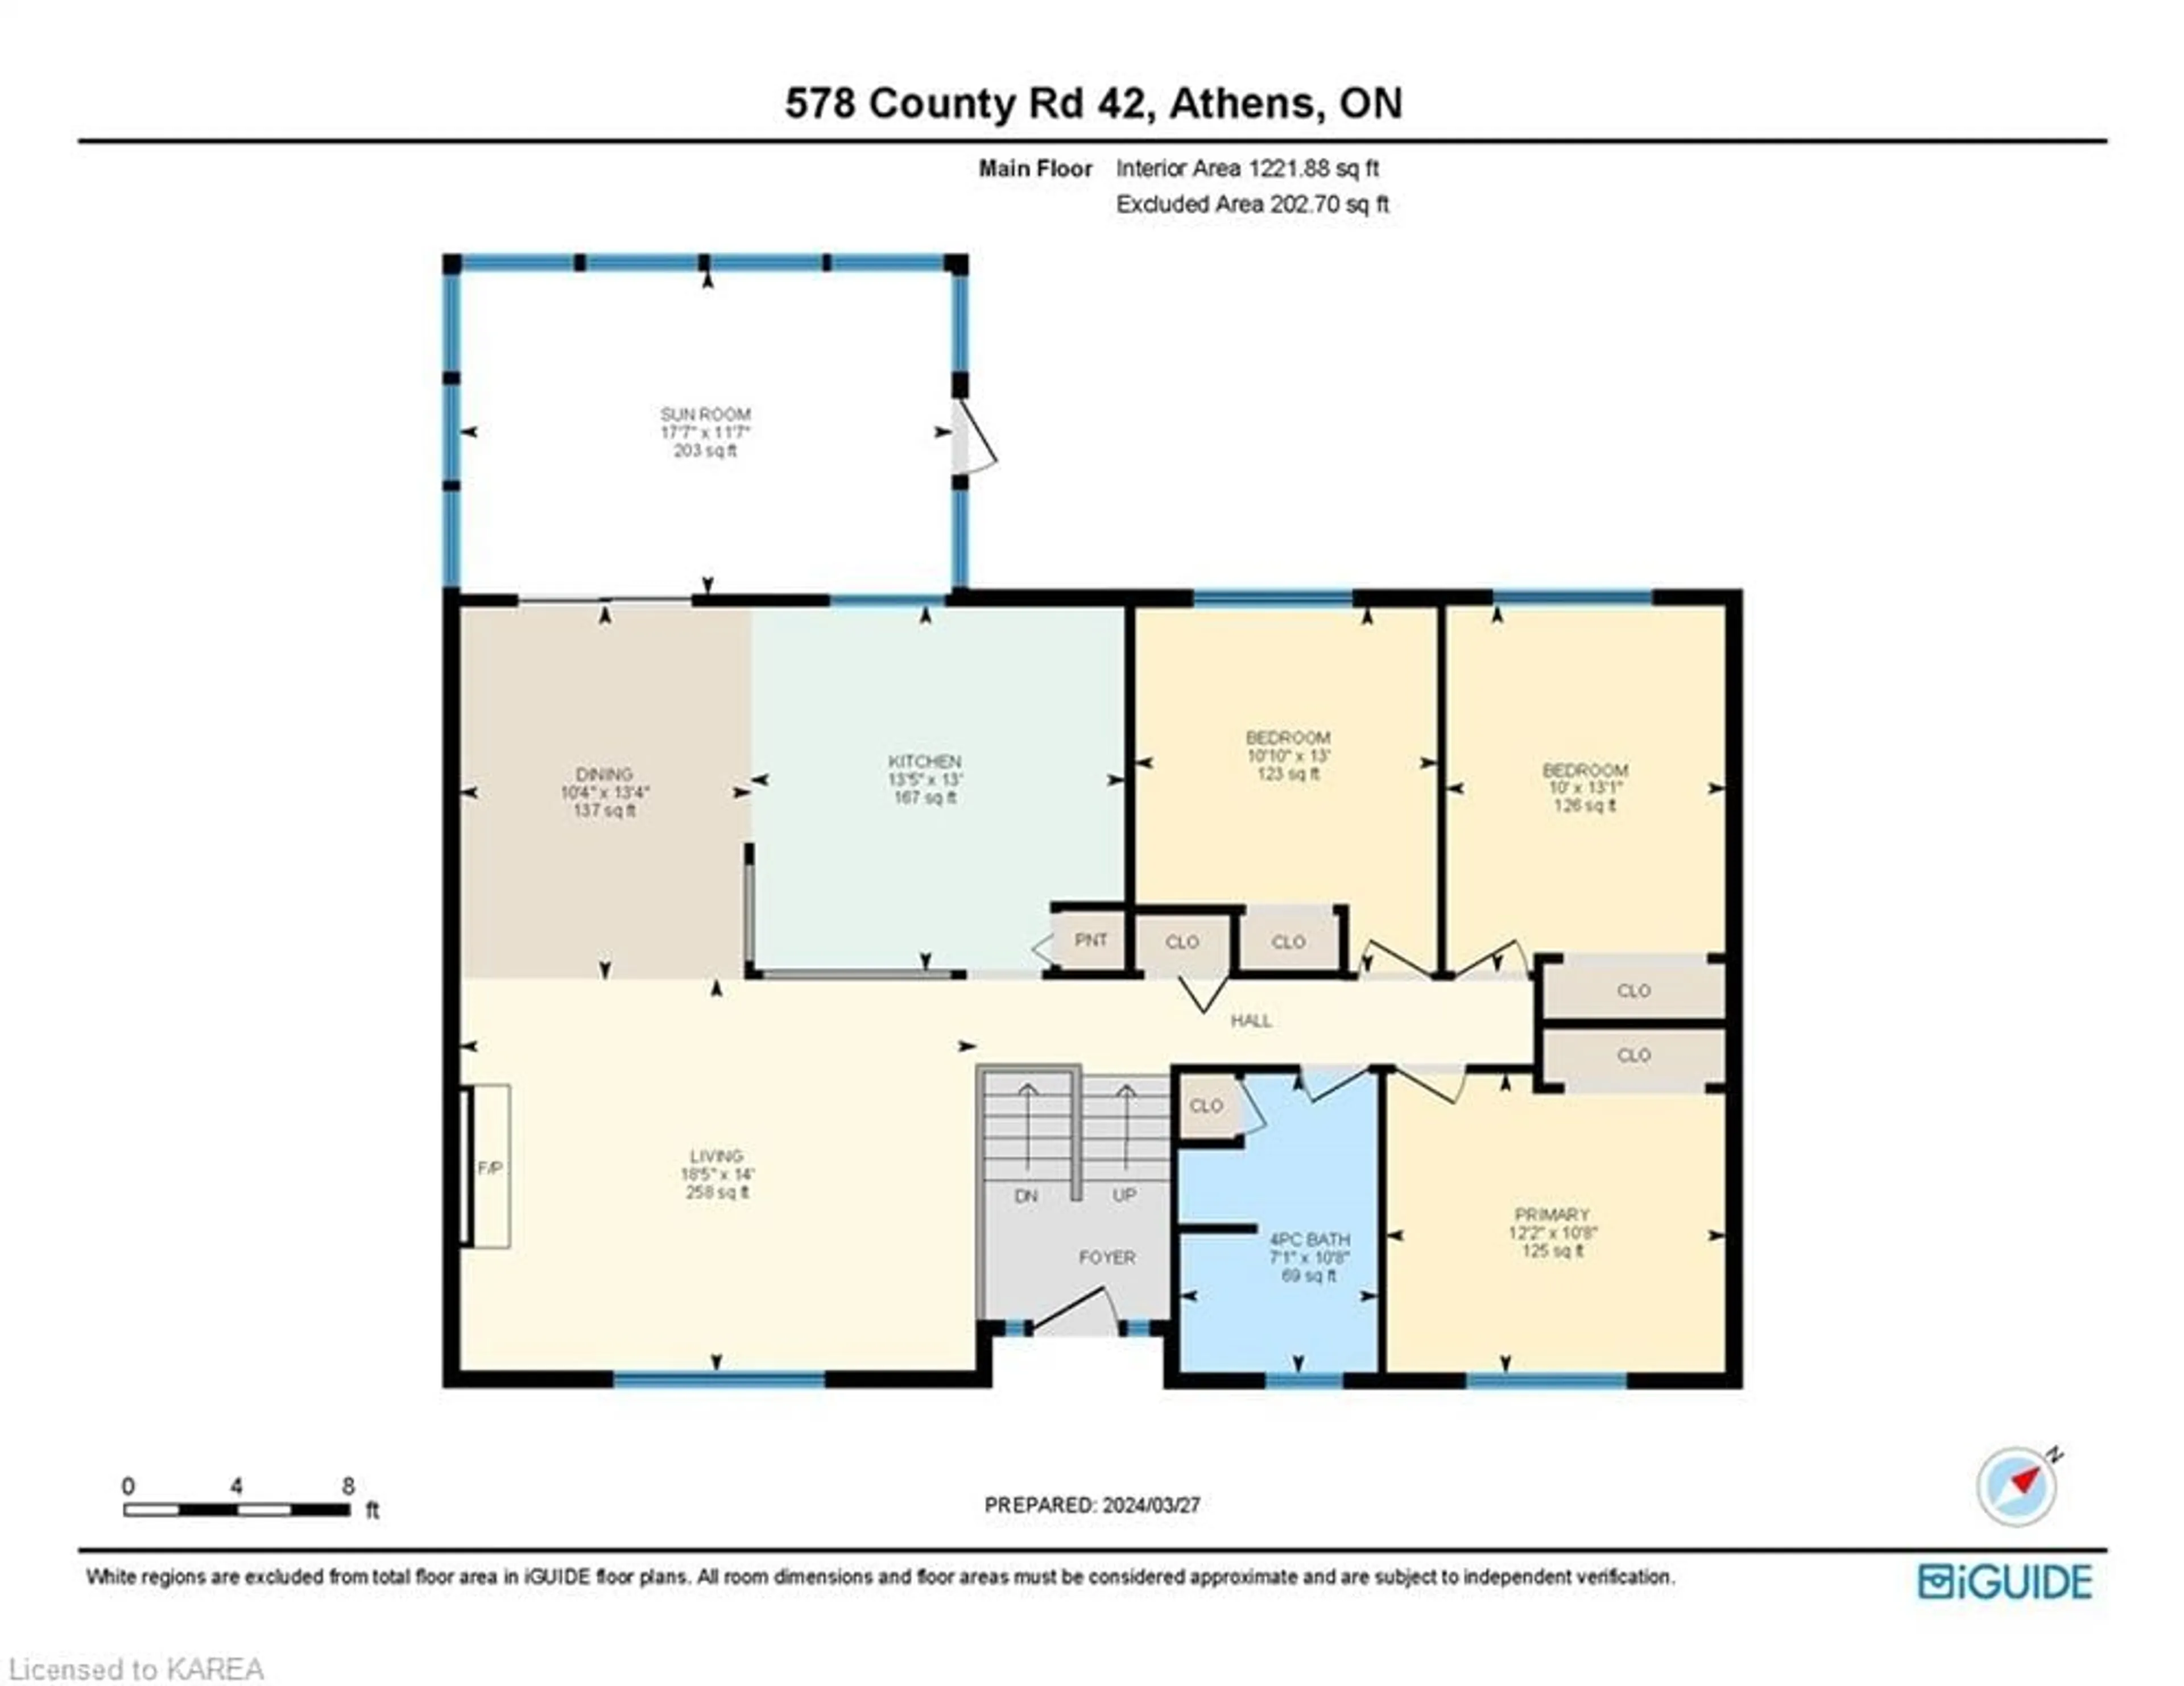 Floor plan for 578 County Road 42, Athens Ontario K0E 1B0